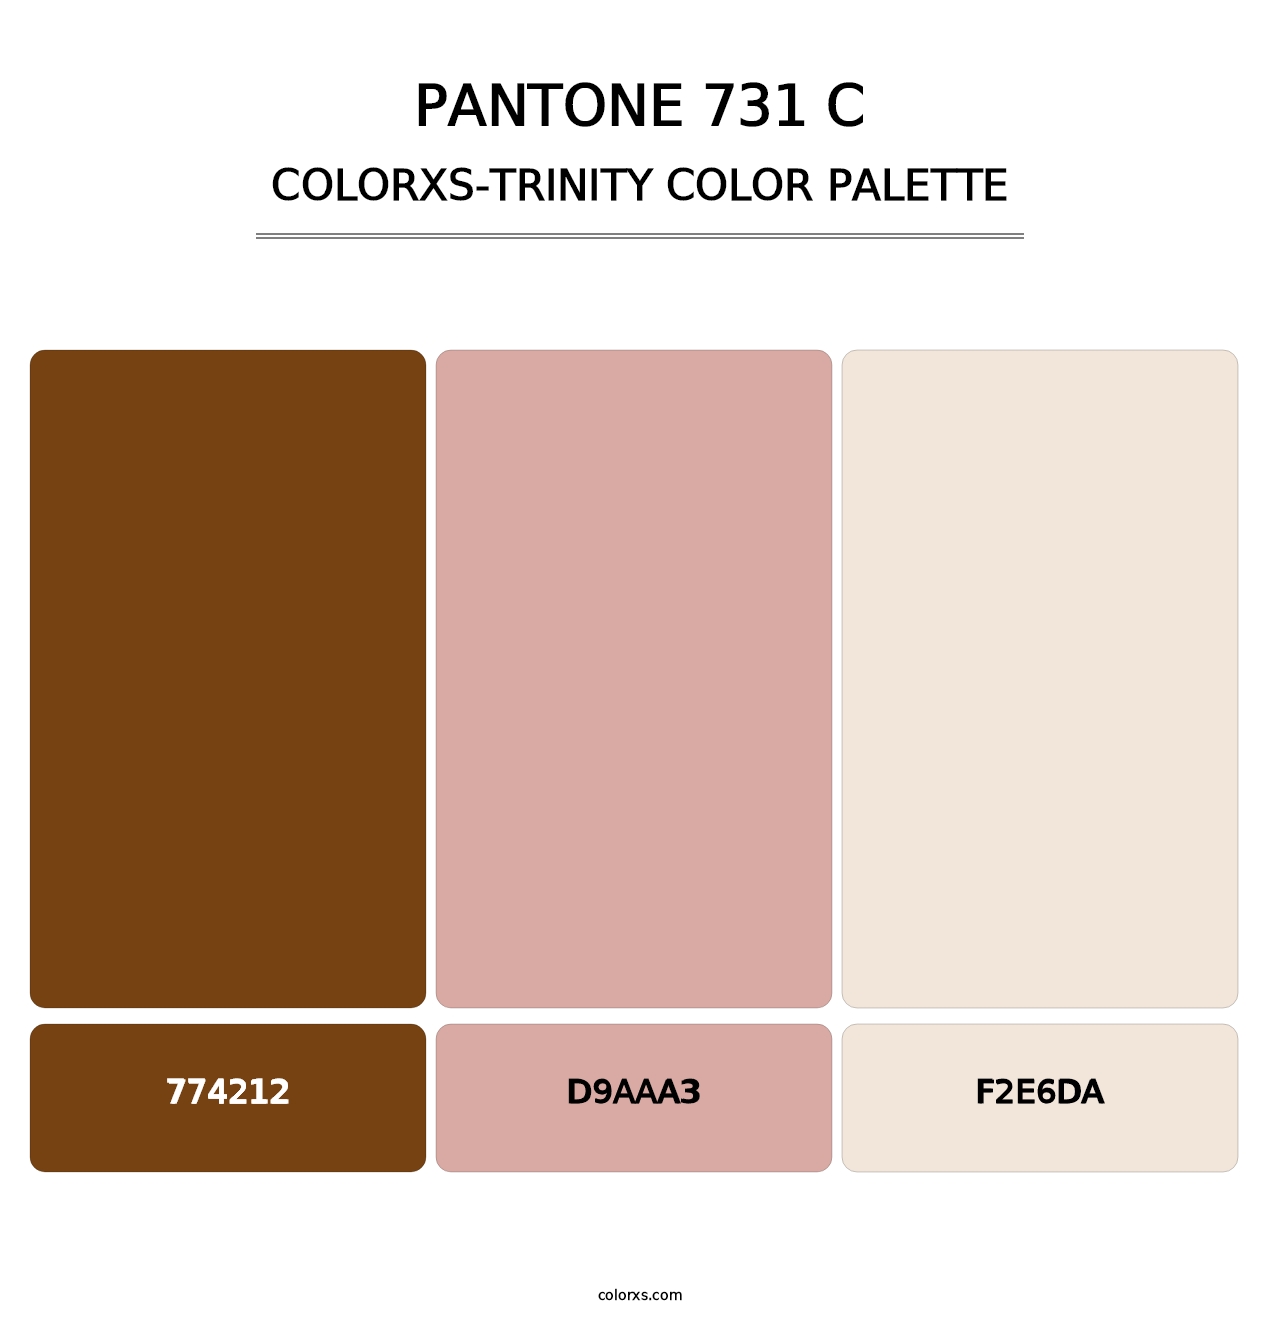 PANTONE 731 C - Colorxs Trinity Palette